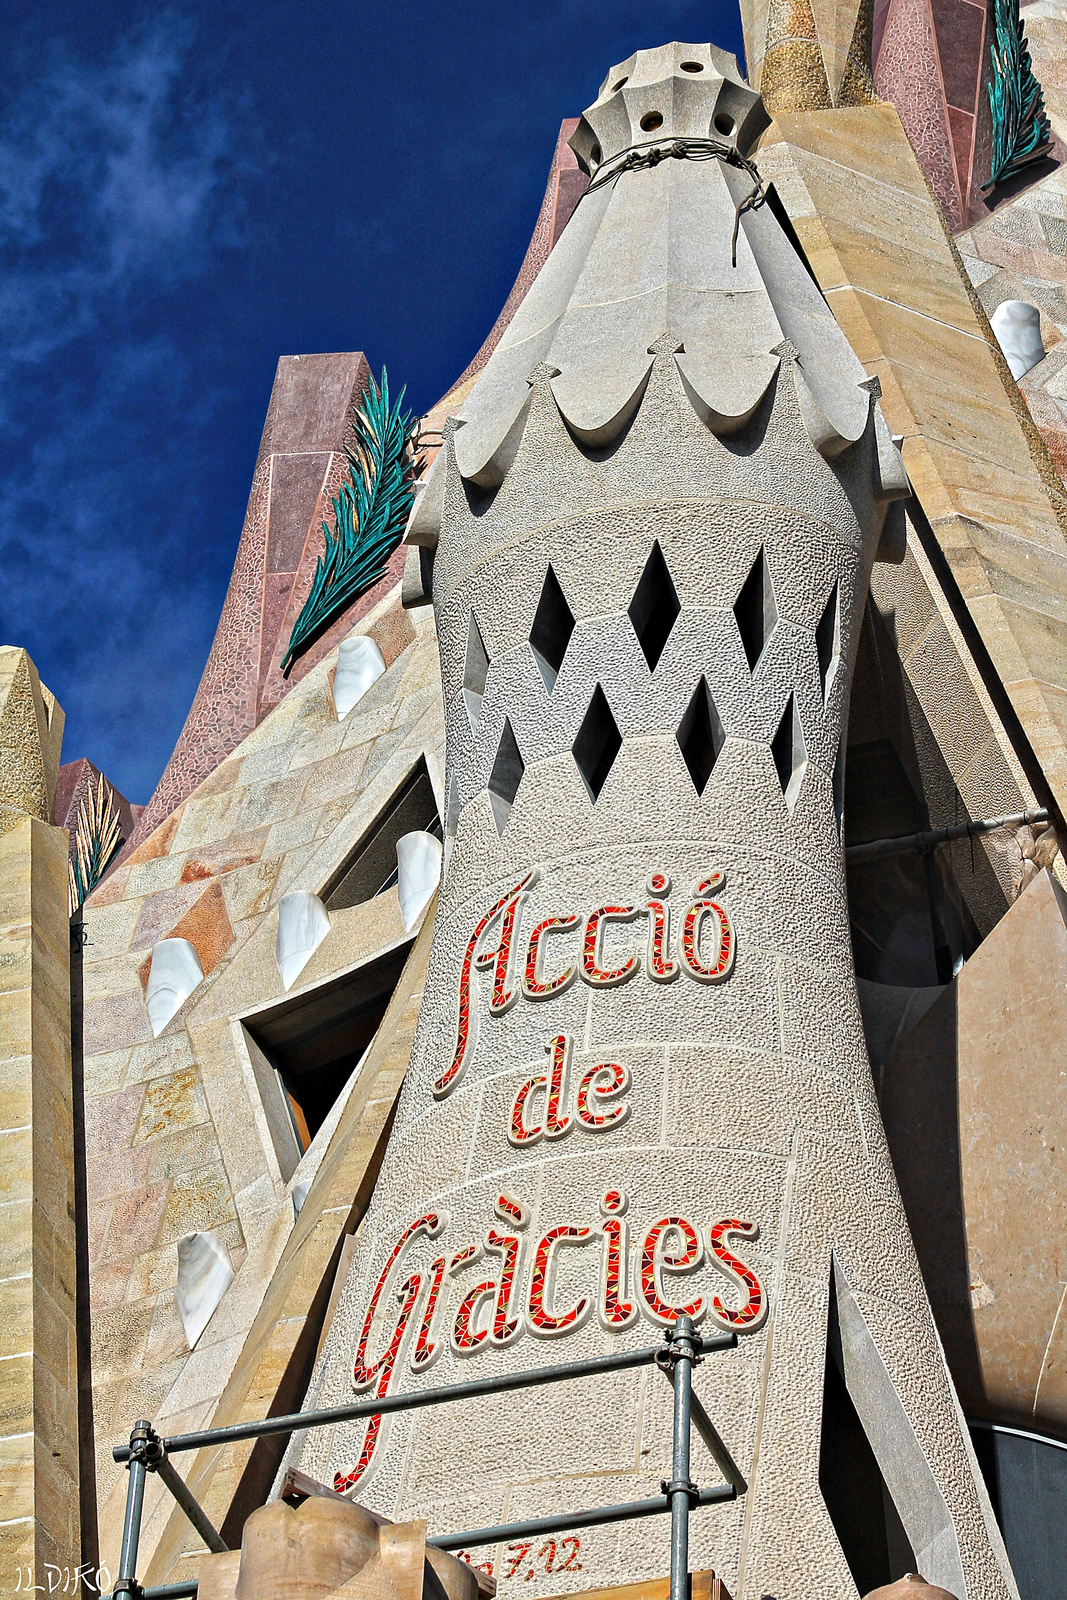 Sagrada Familia - Barcelona 0255..